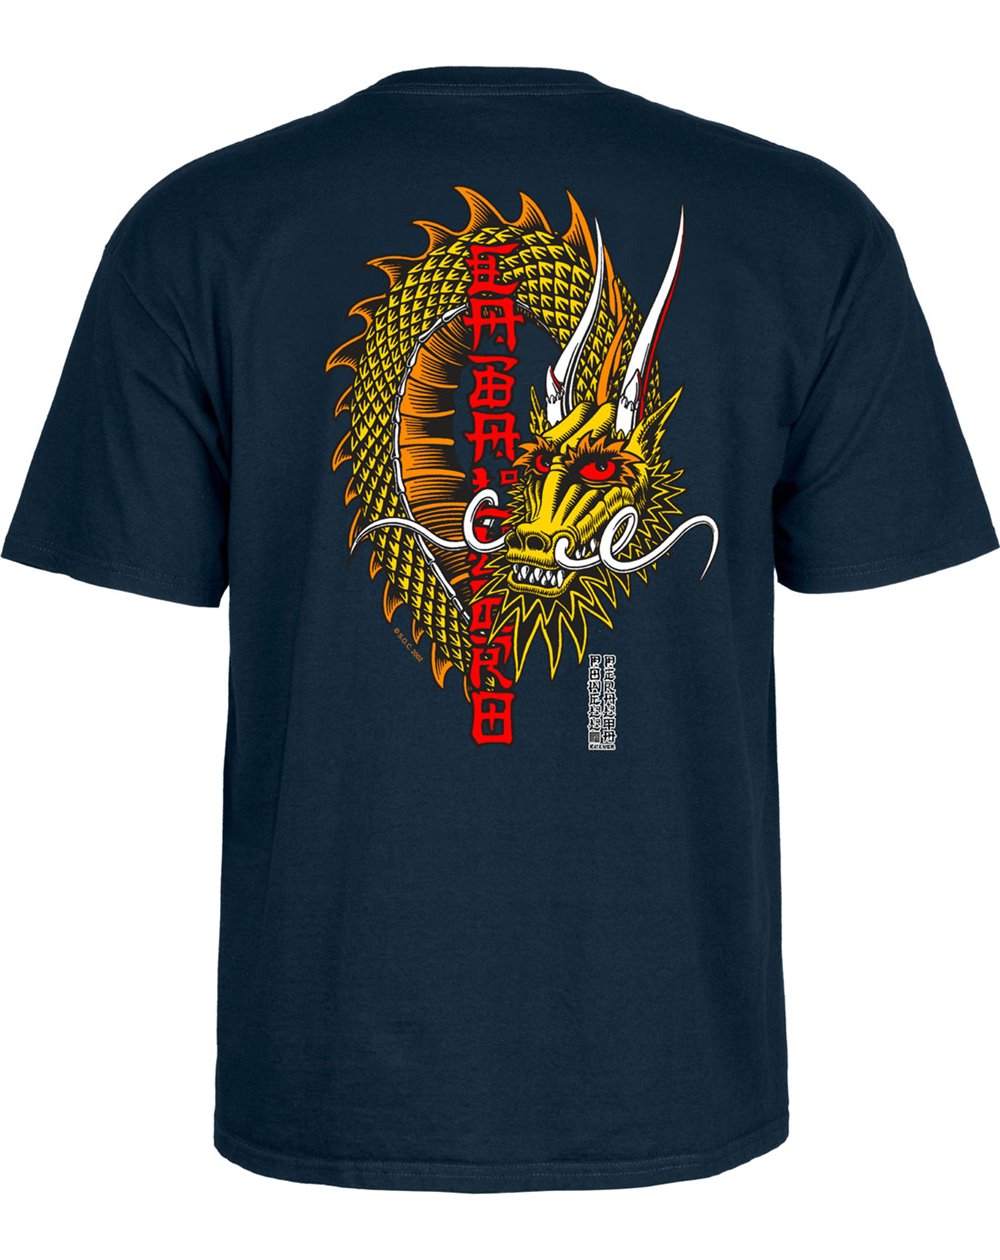 Powell Peralta Men's T-Shirt Steve Caballero Ban This Dragon (Navy)